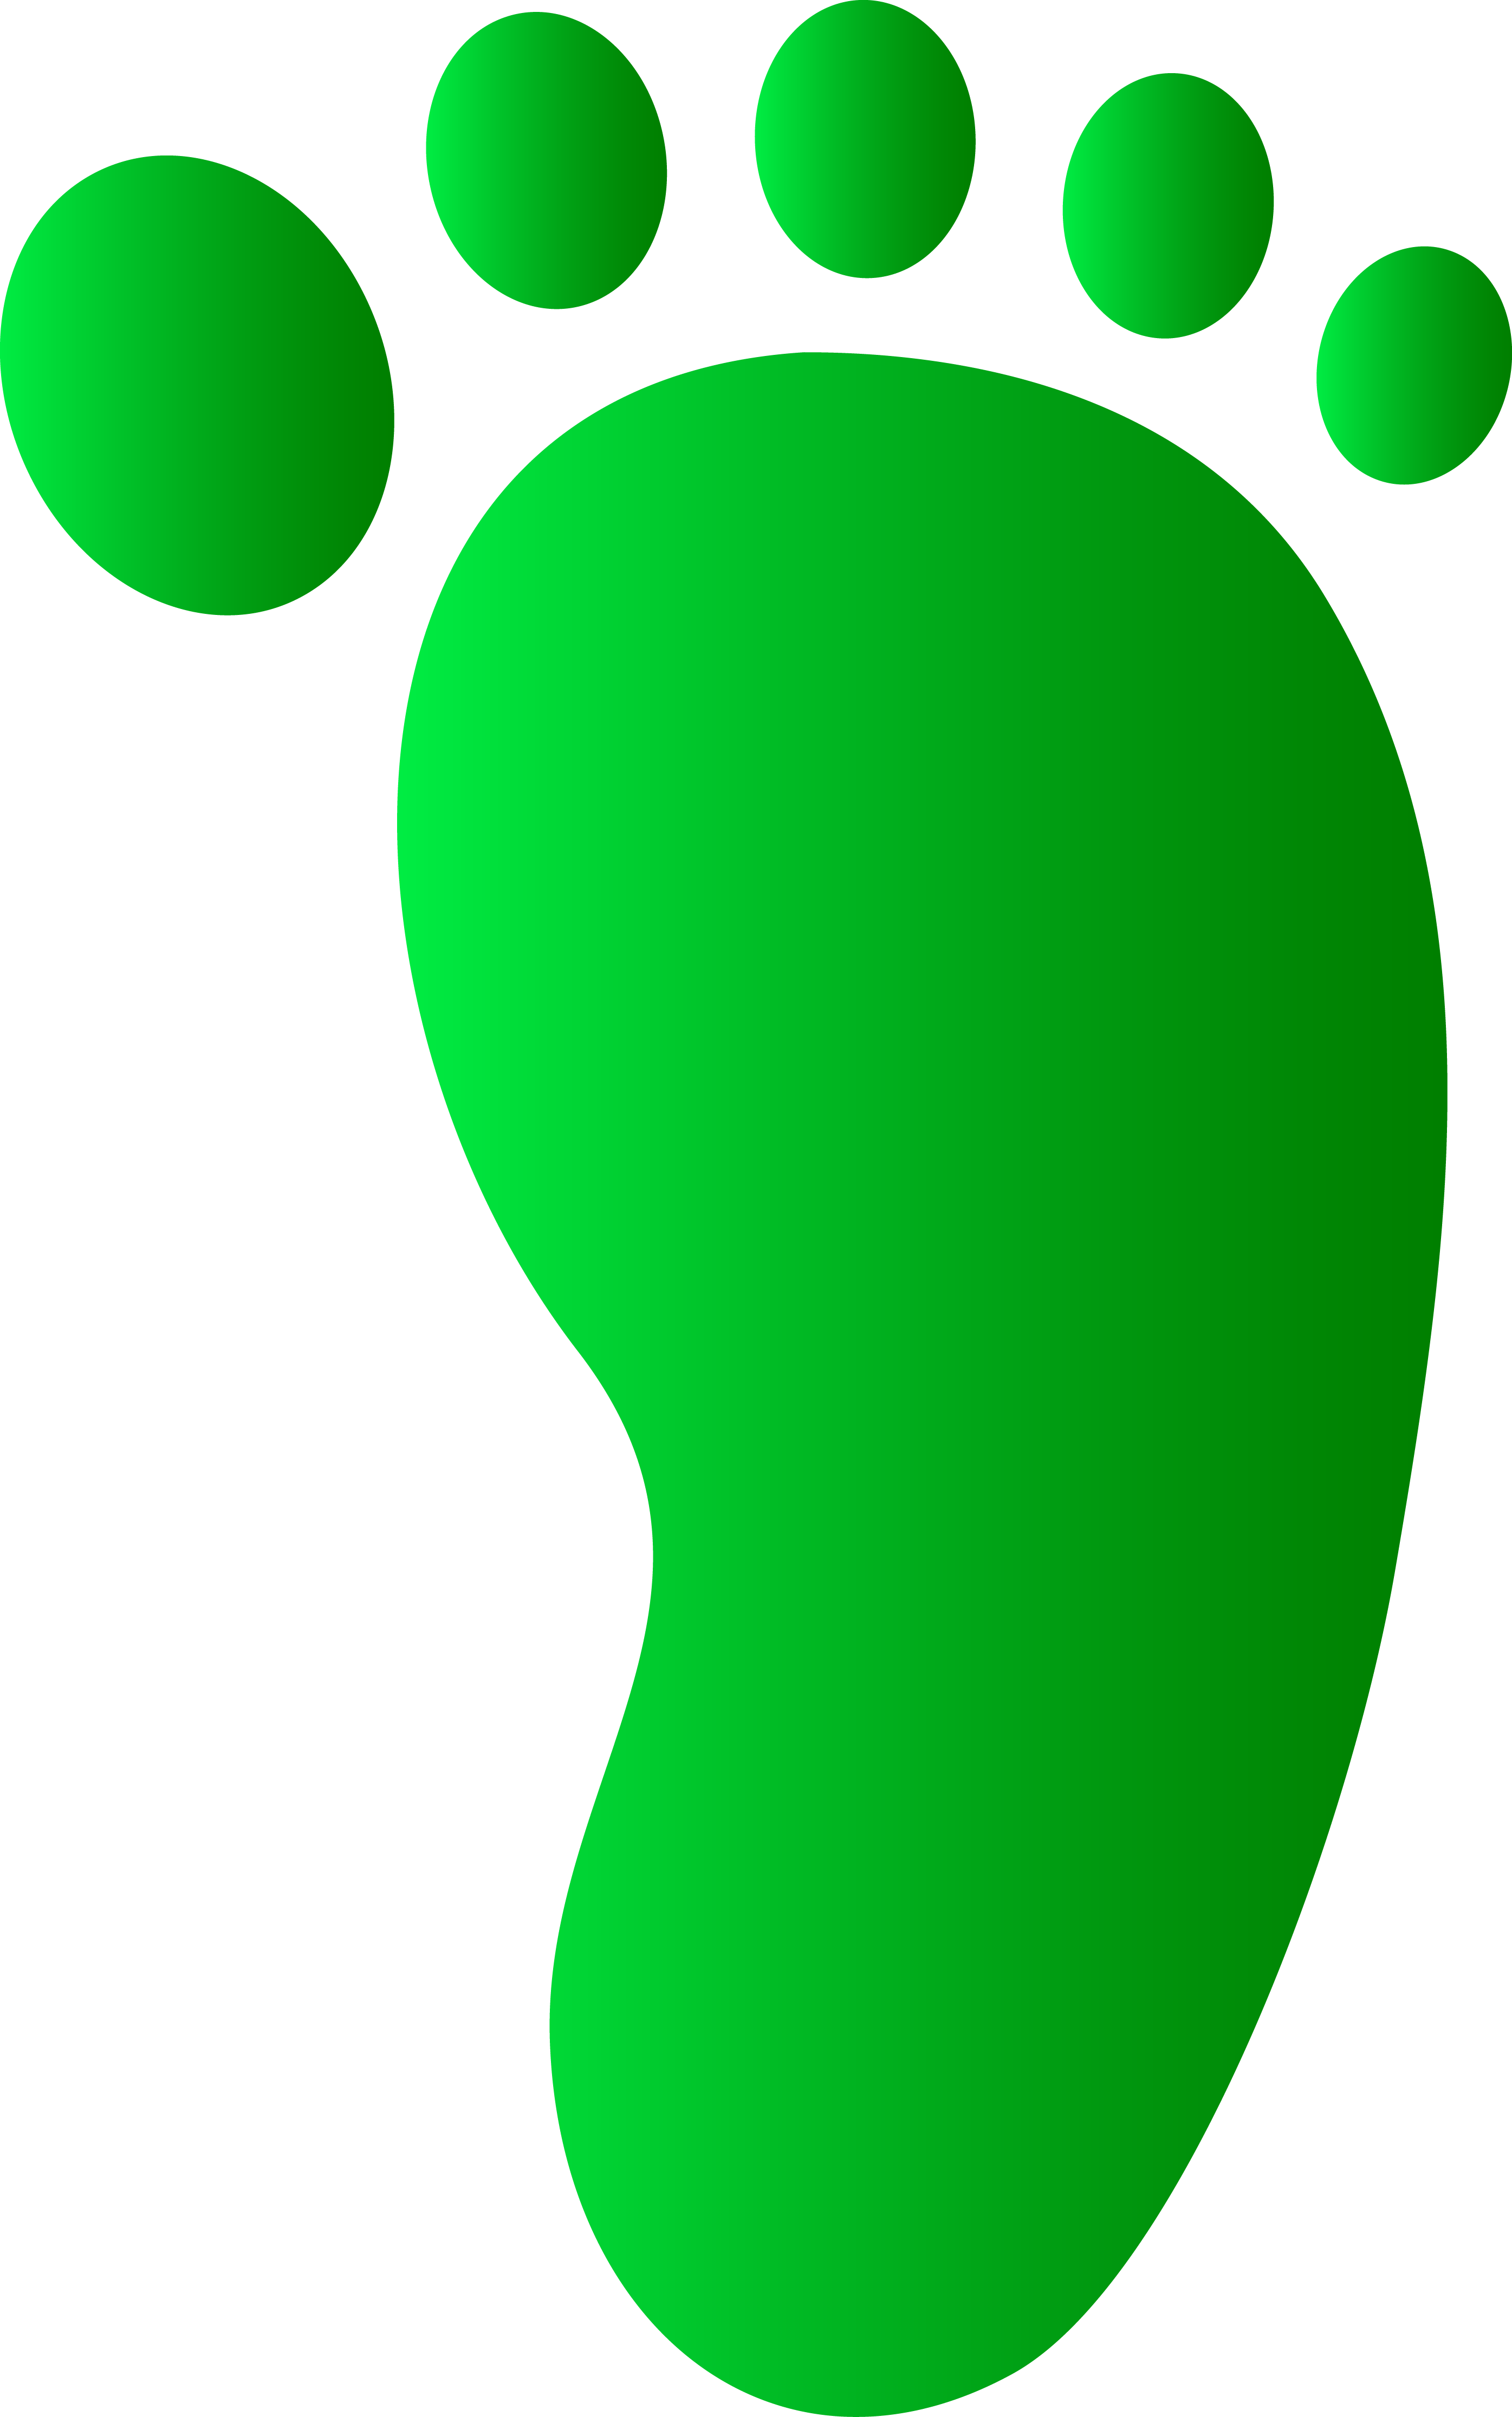 Green Human Foot Print - Free Clip Art